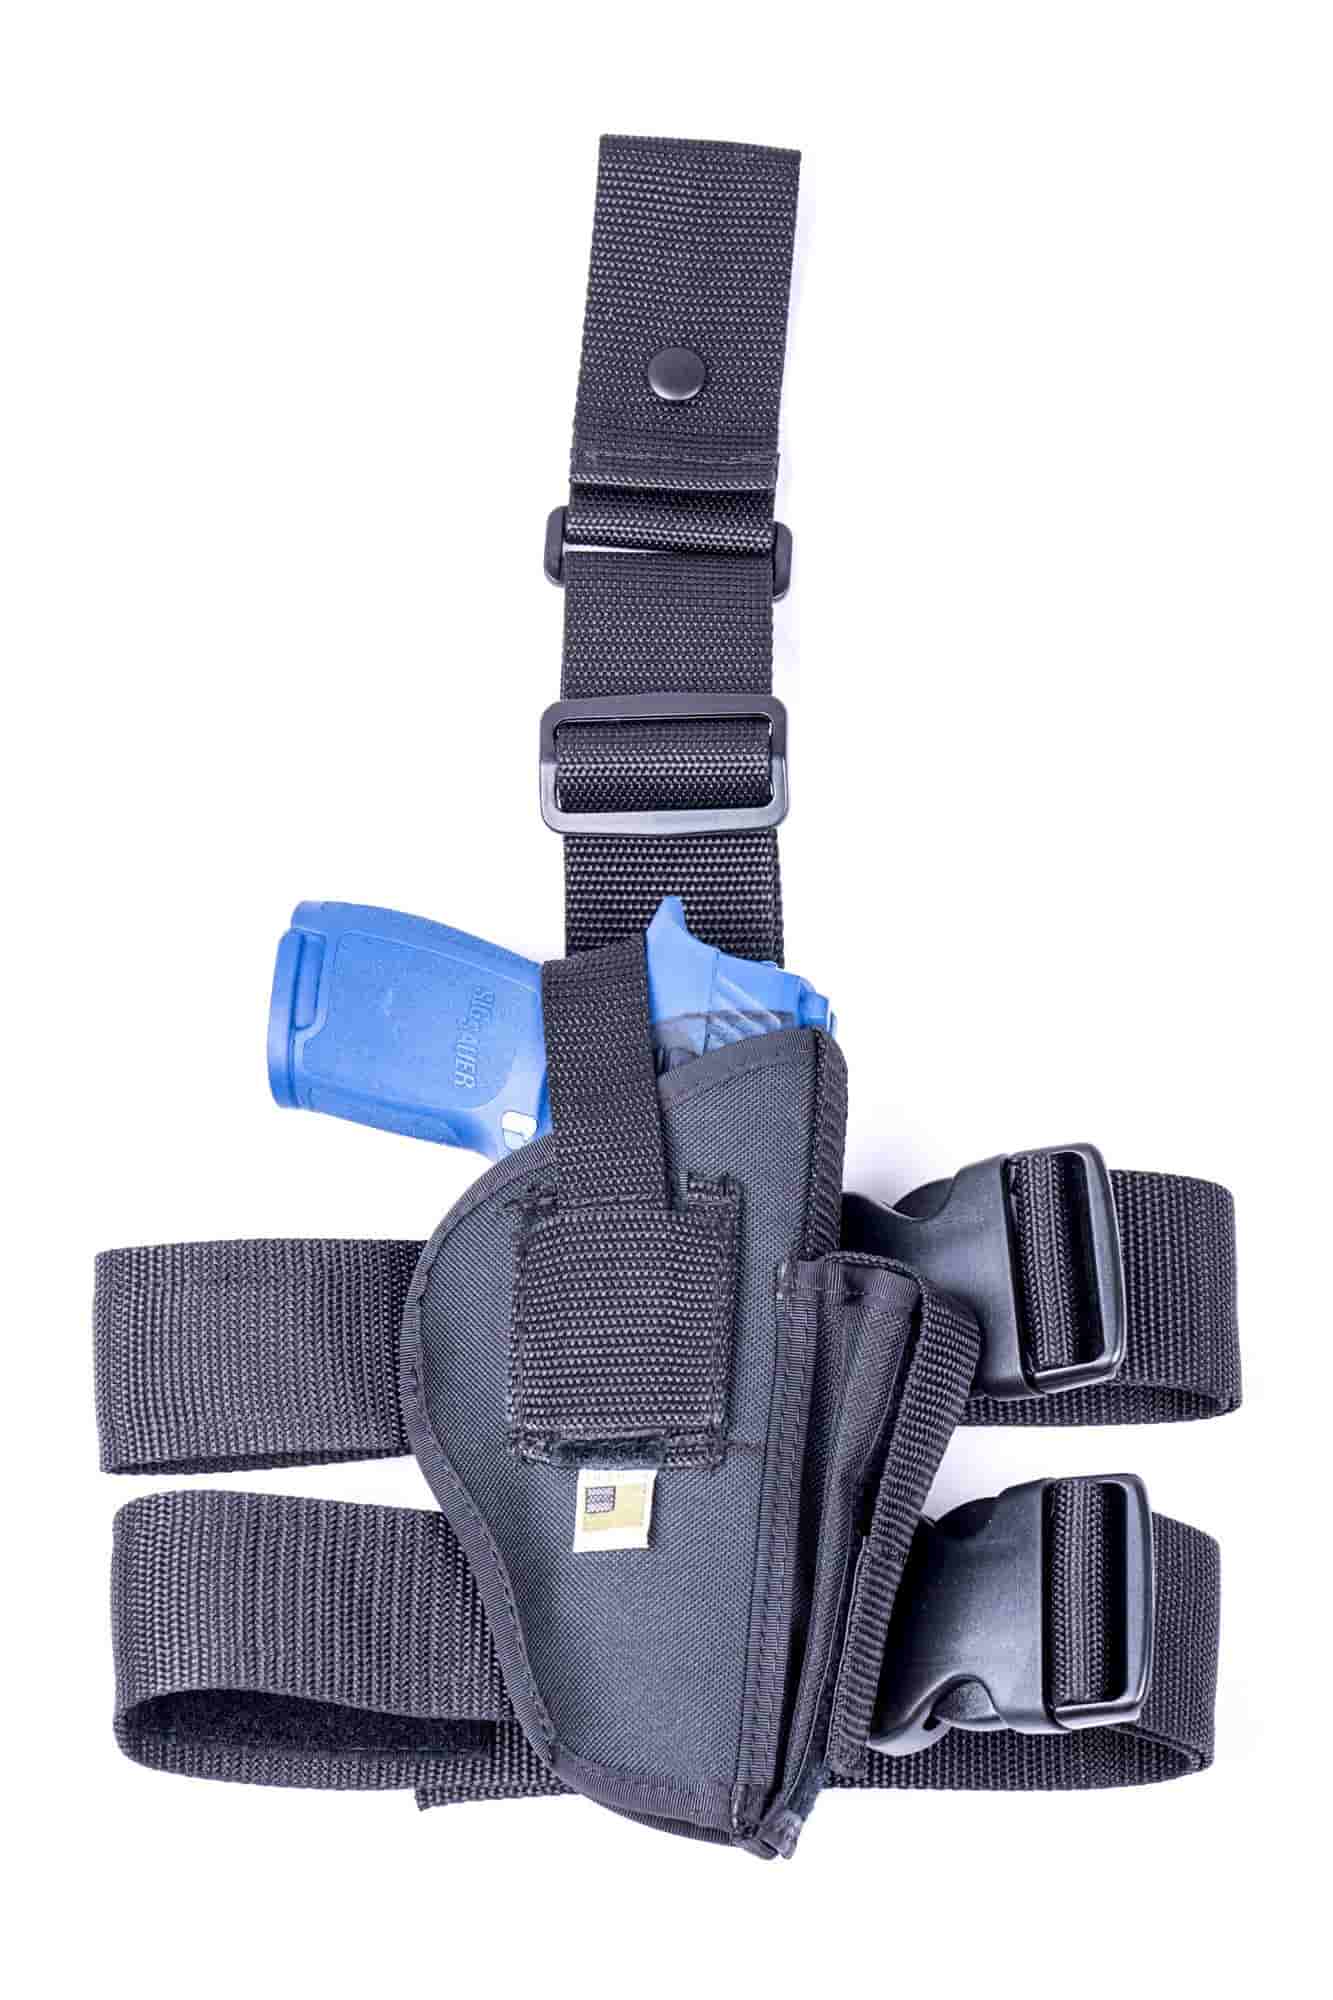 Drop leg SHEATH (large), tan leather belt loop carry, – Half Face